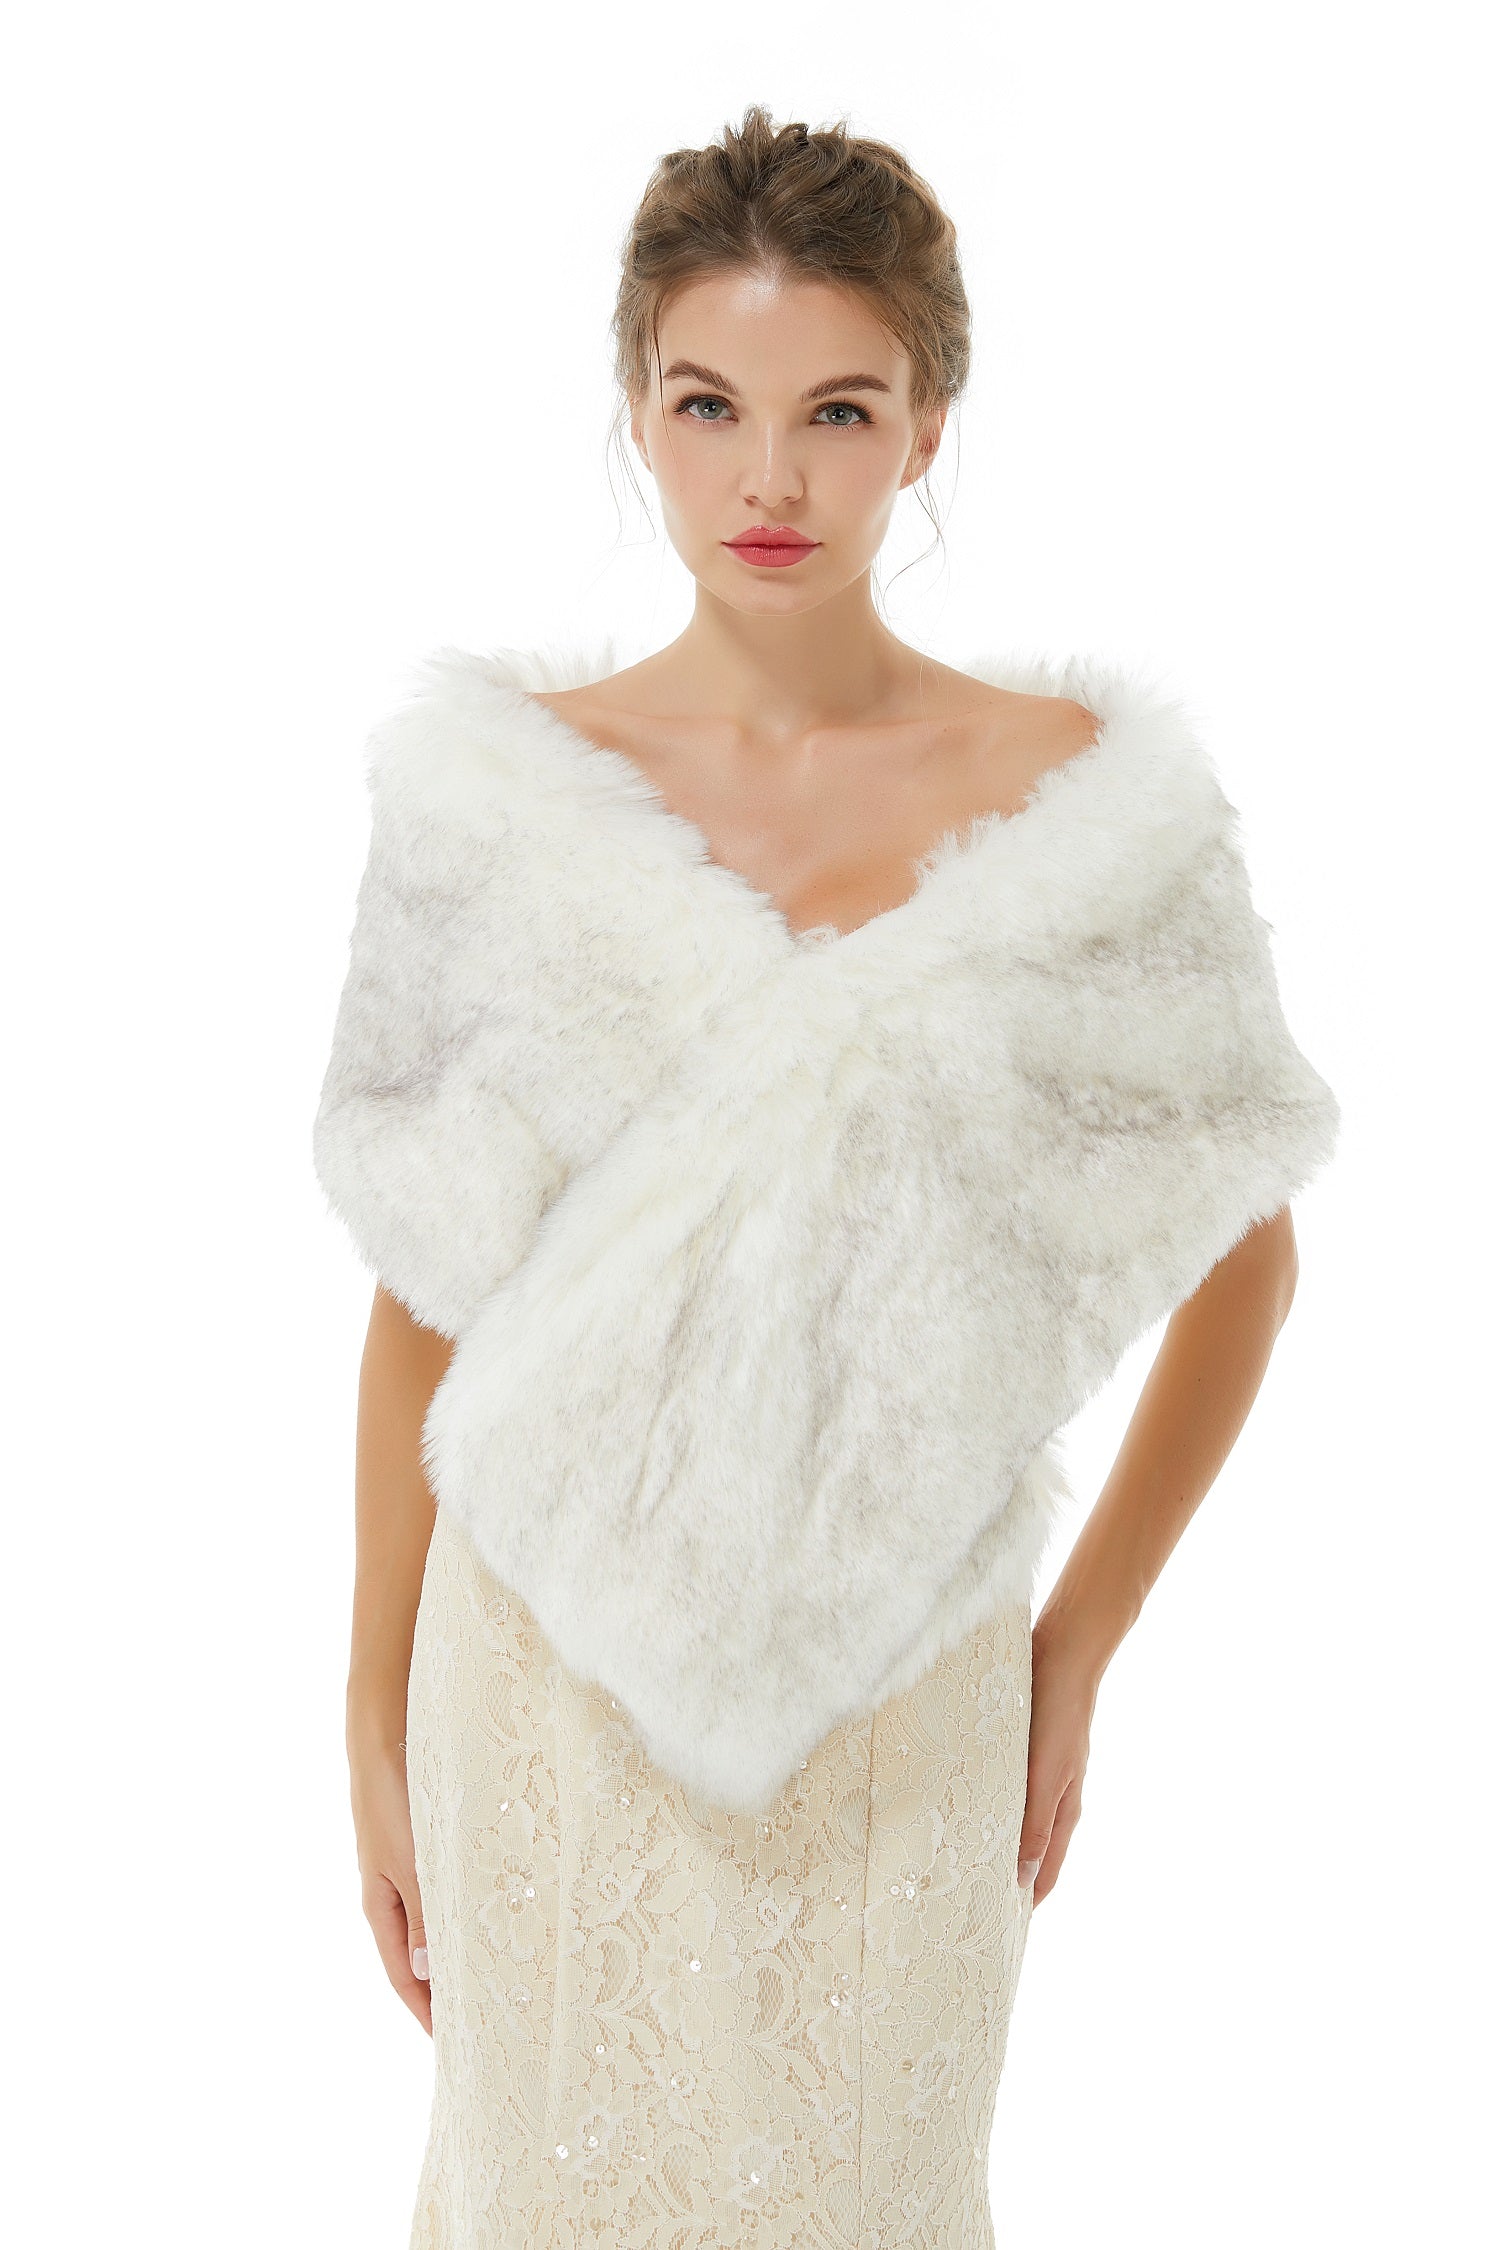 Fabulous Ivory Faux Fur Wedding Shawl for Brides Online - lulusllly